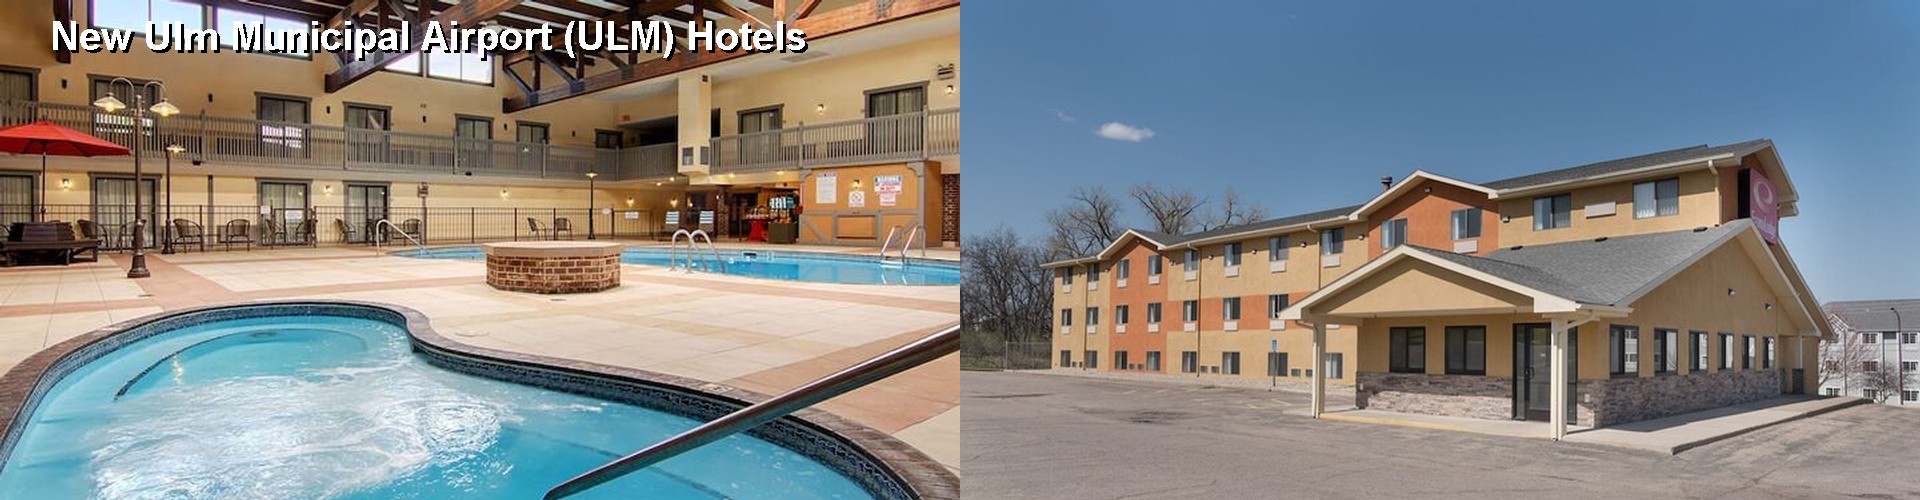 5 Best Hotels near New Ulm Municipal Airport (ULM)